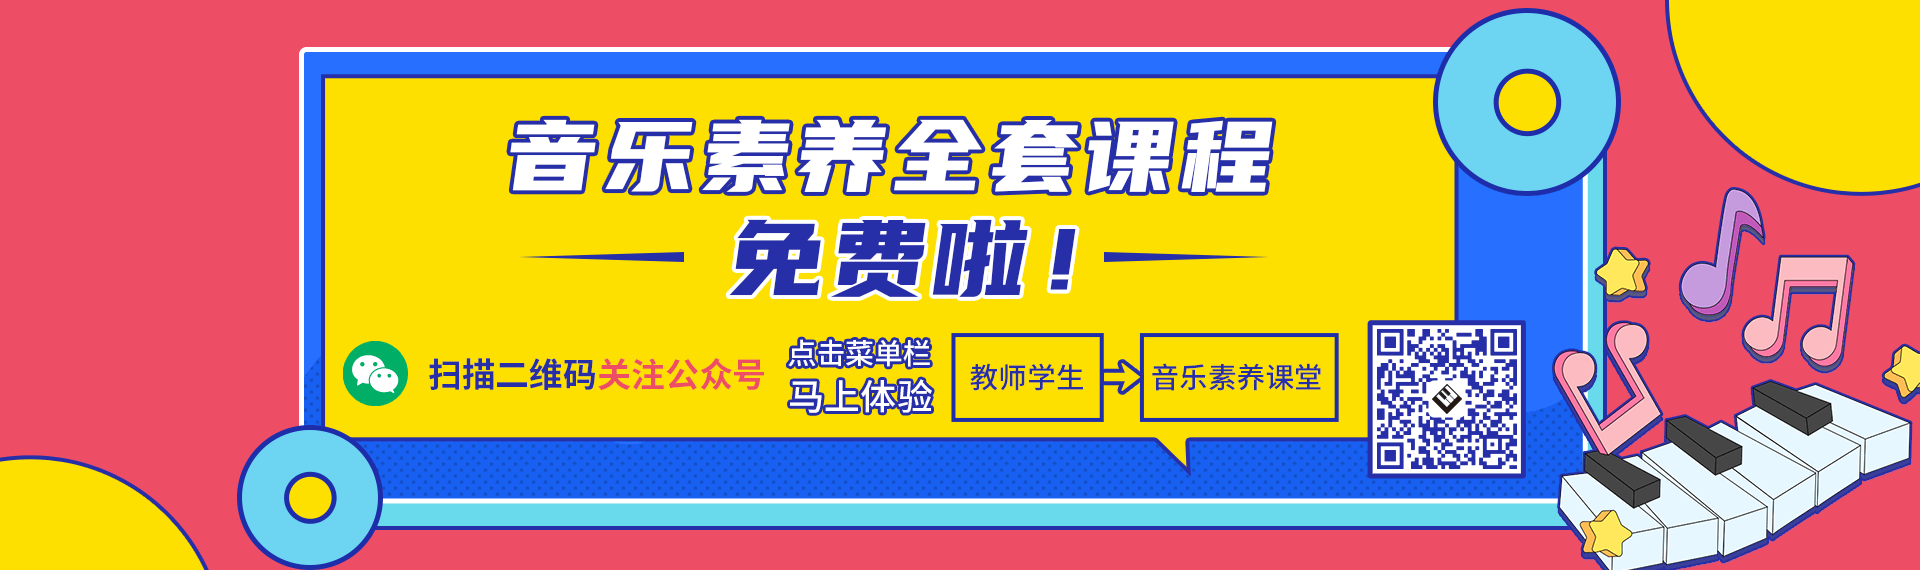 音乐素养课堂-限时免费-官网banner